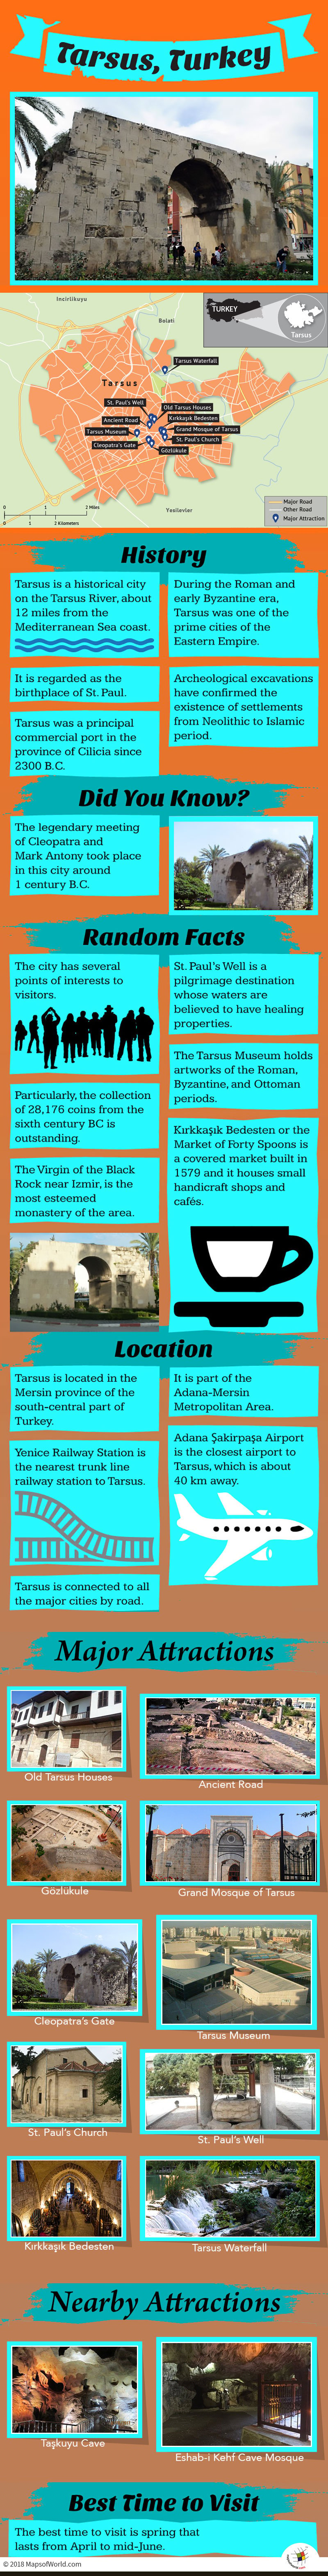 Popular Places to visit in Tarsus